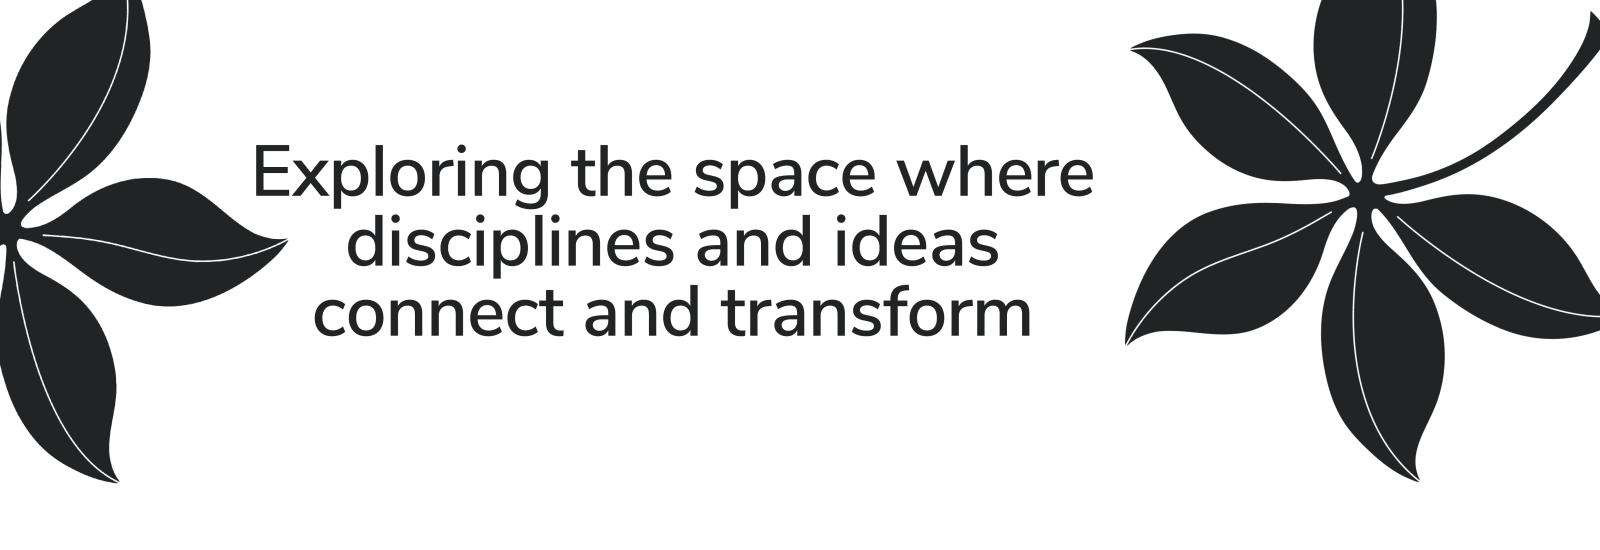 Exploring the space where disciplines & ideas connect & transform